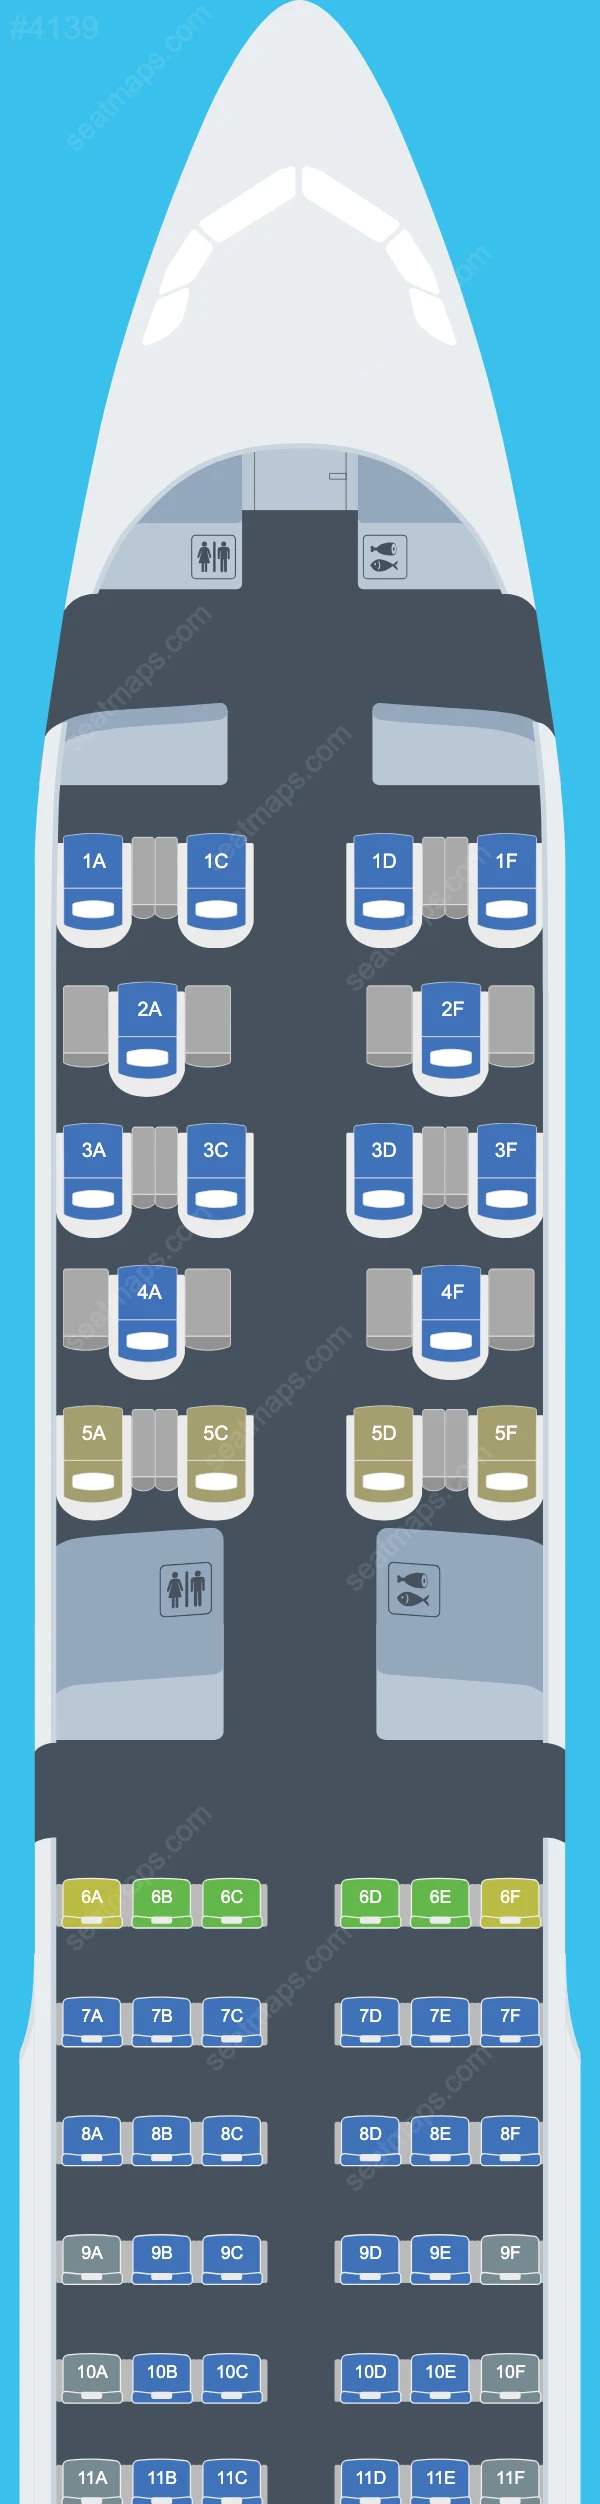 JetBlue Airways Airbus A321 Seat Maps A321-200 V.1